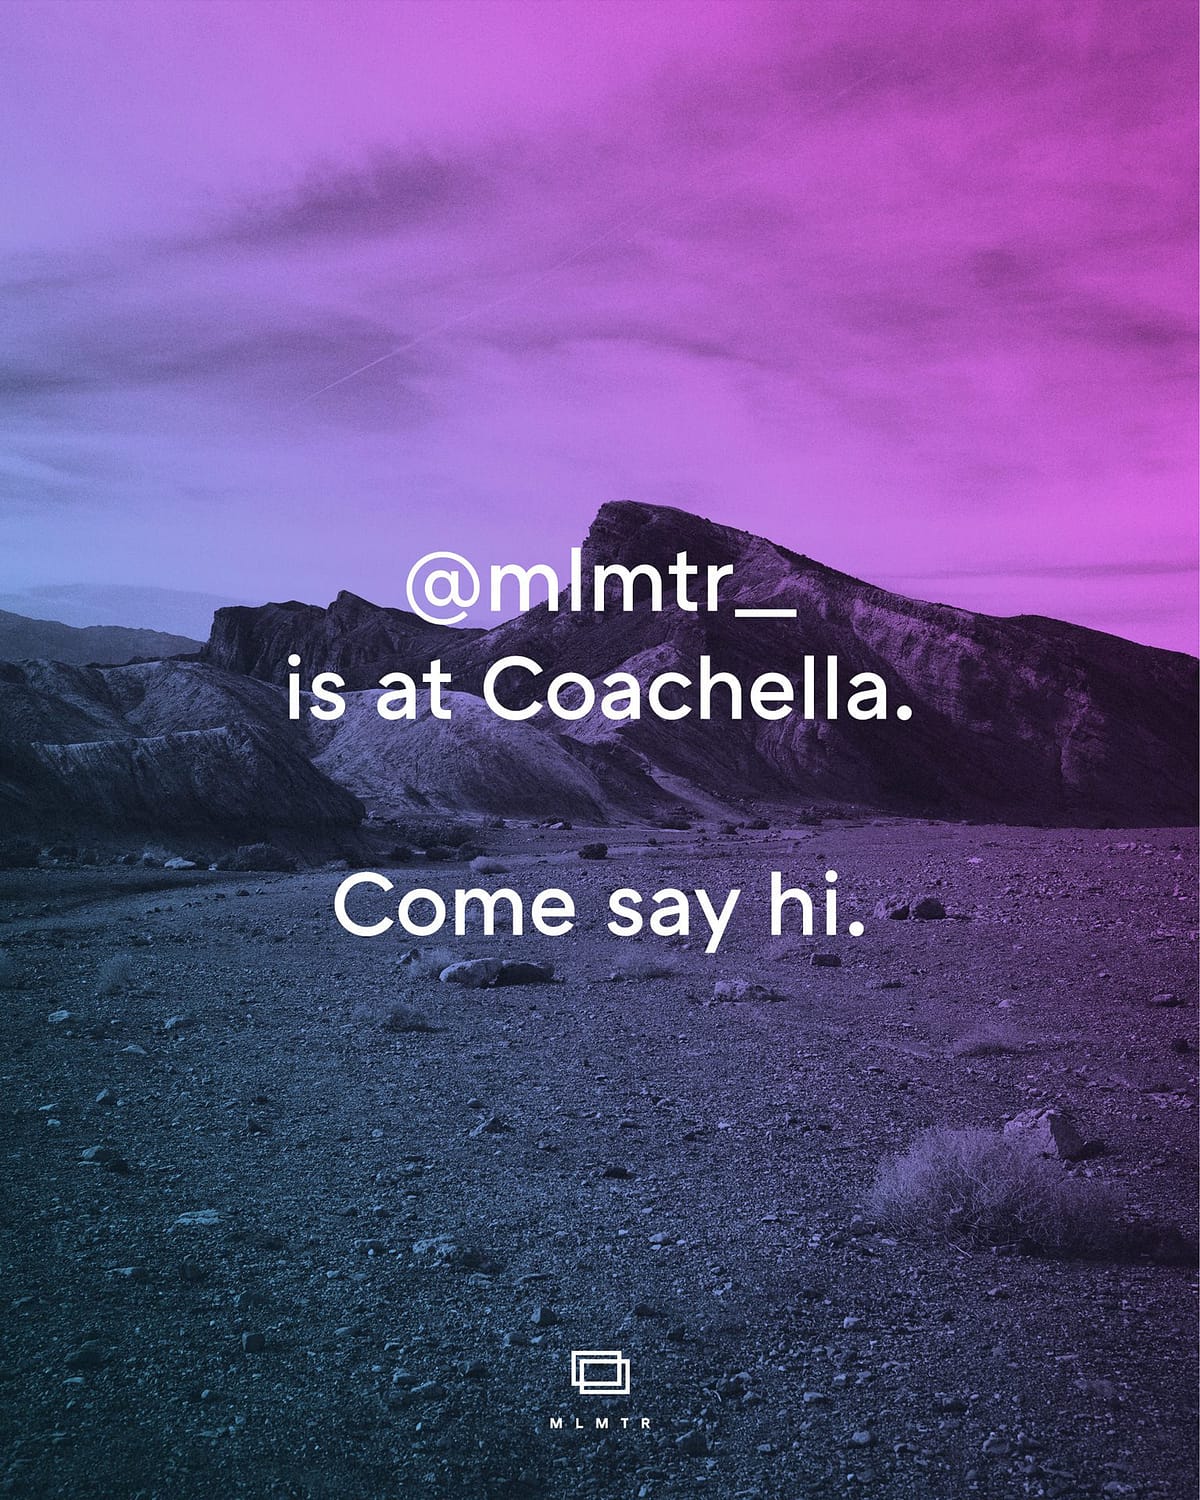 Mlmtr is at Coachella